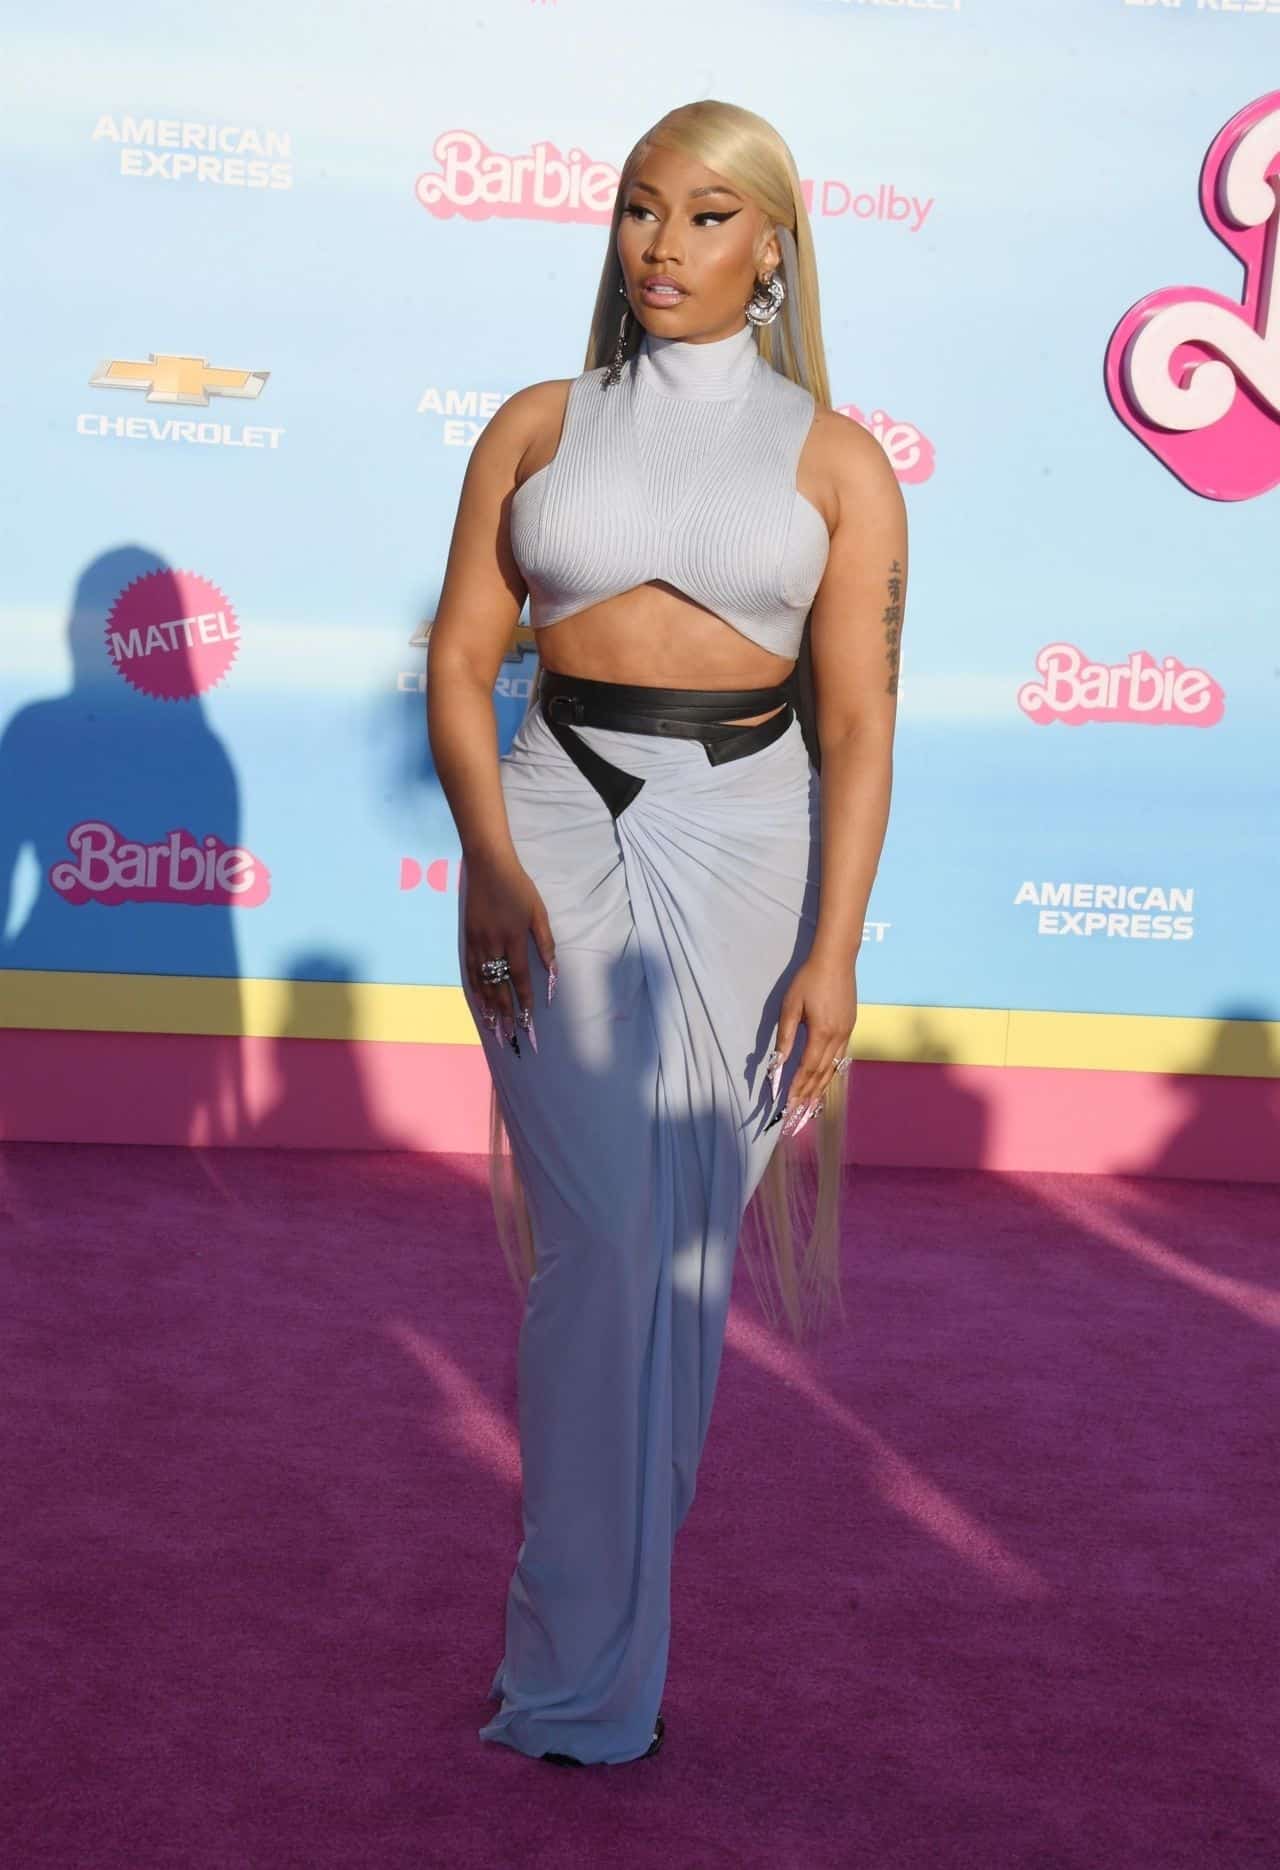 Nicki Minaj Embodies Elegance in Silver Dress at “Barbie” Premiere